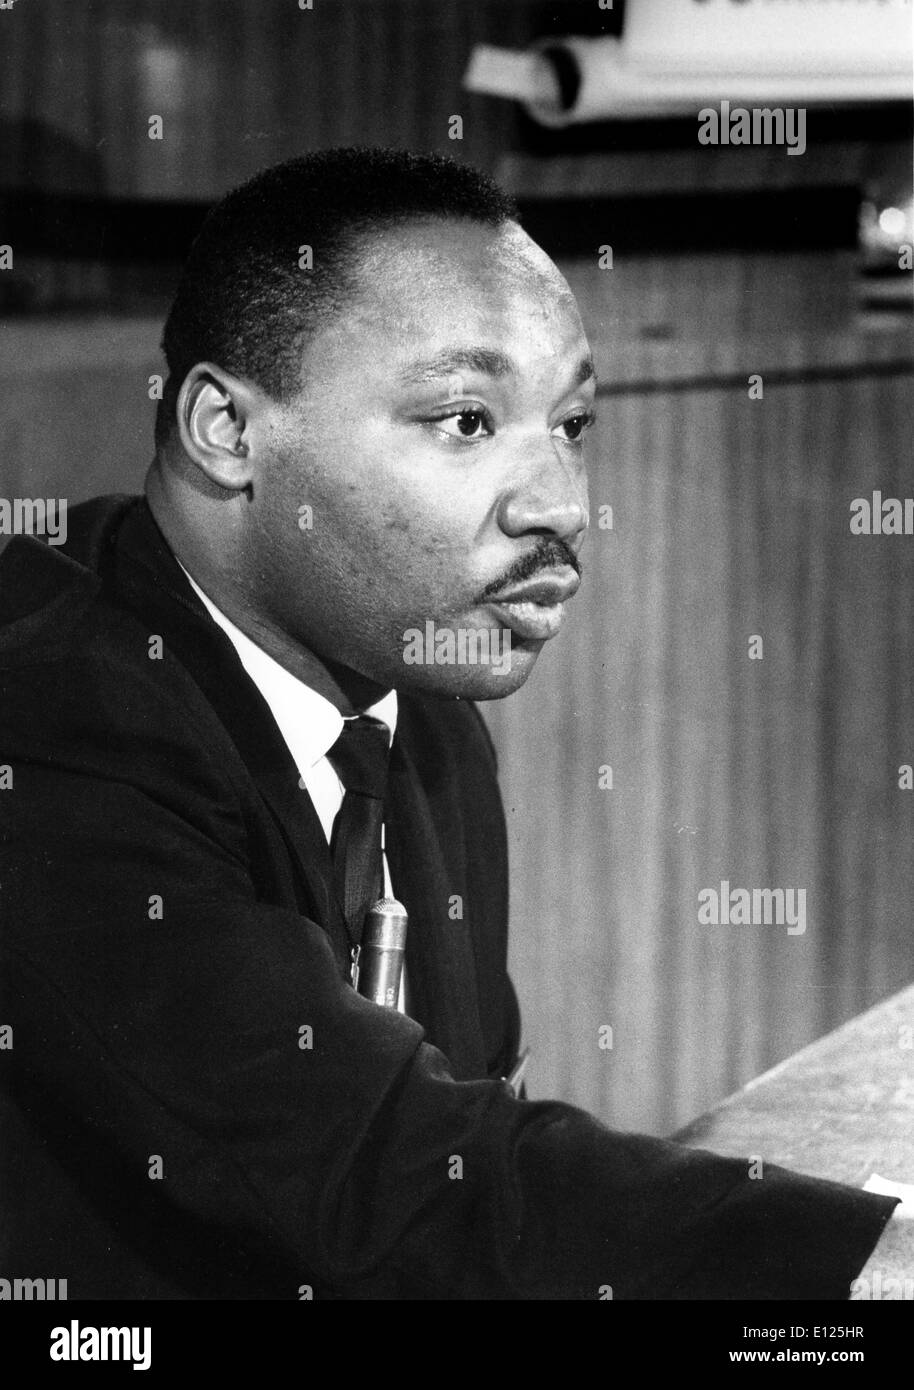 Jan 02, 2005 ; New York, NY, USA ; (Photo d'archives. Date inconnue) Le révérend Martin Luther King jr.. mesures U Banque D'Images